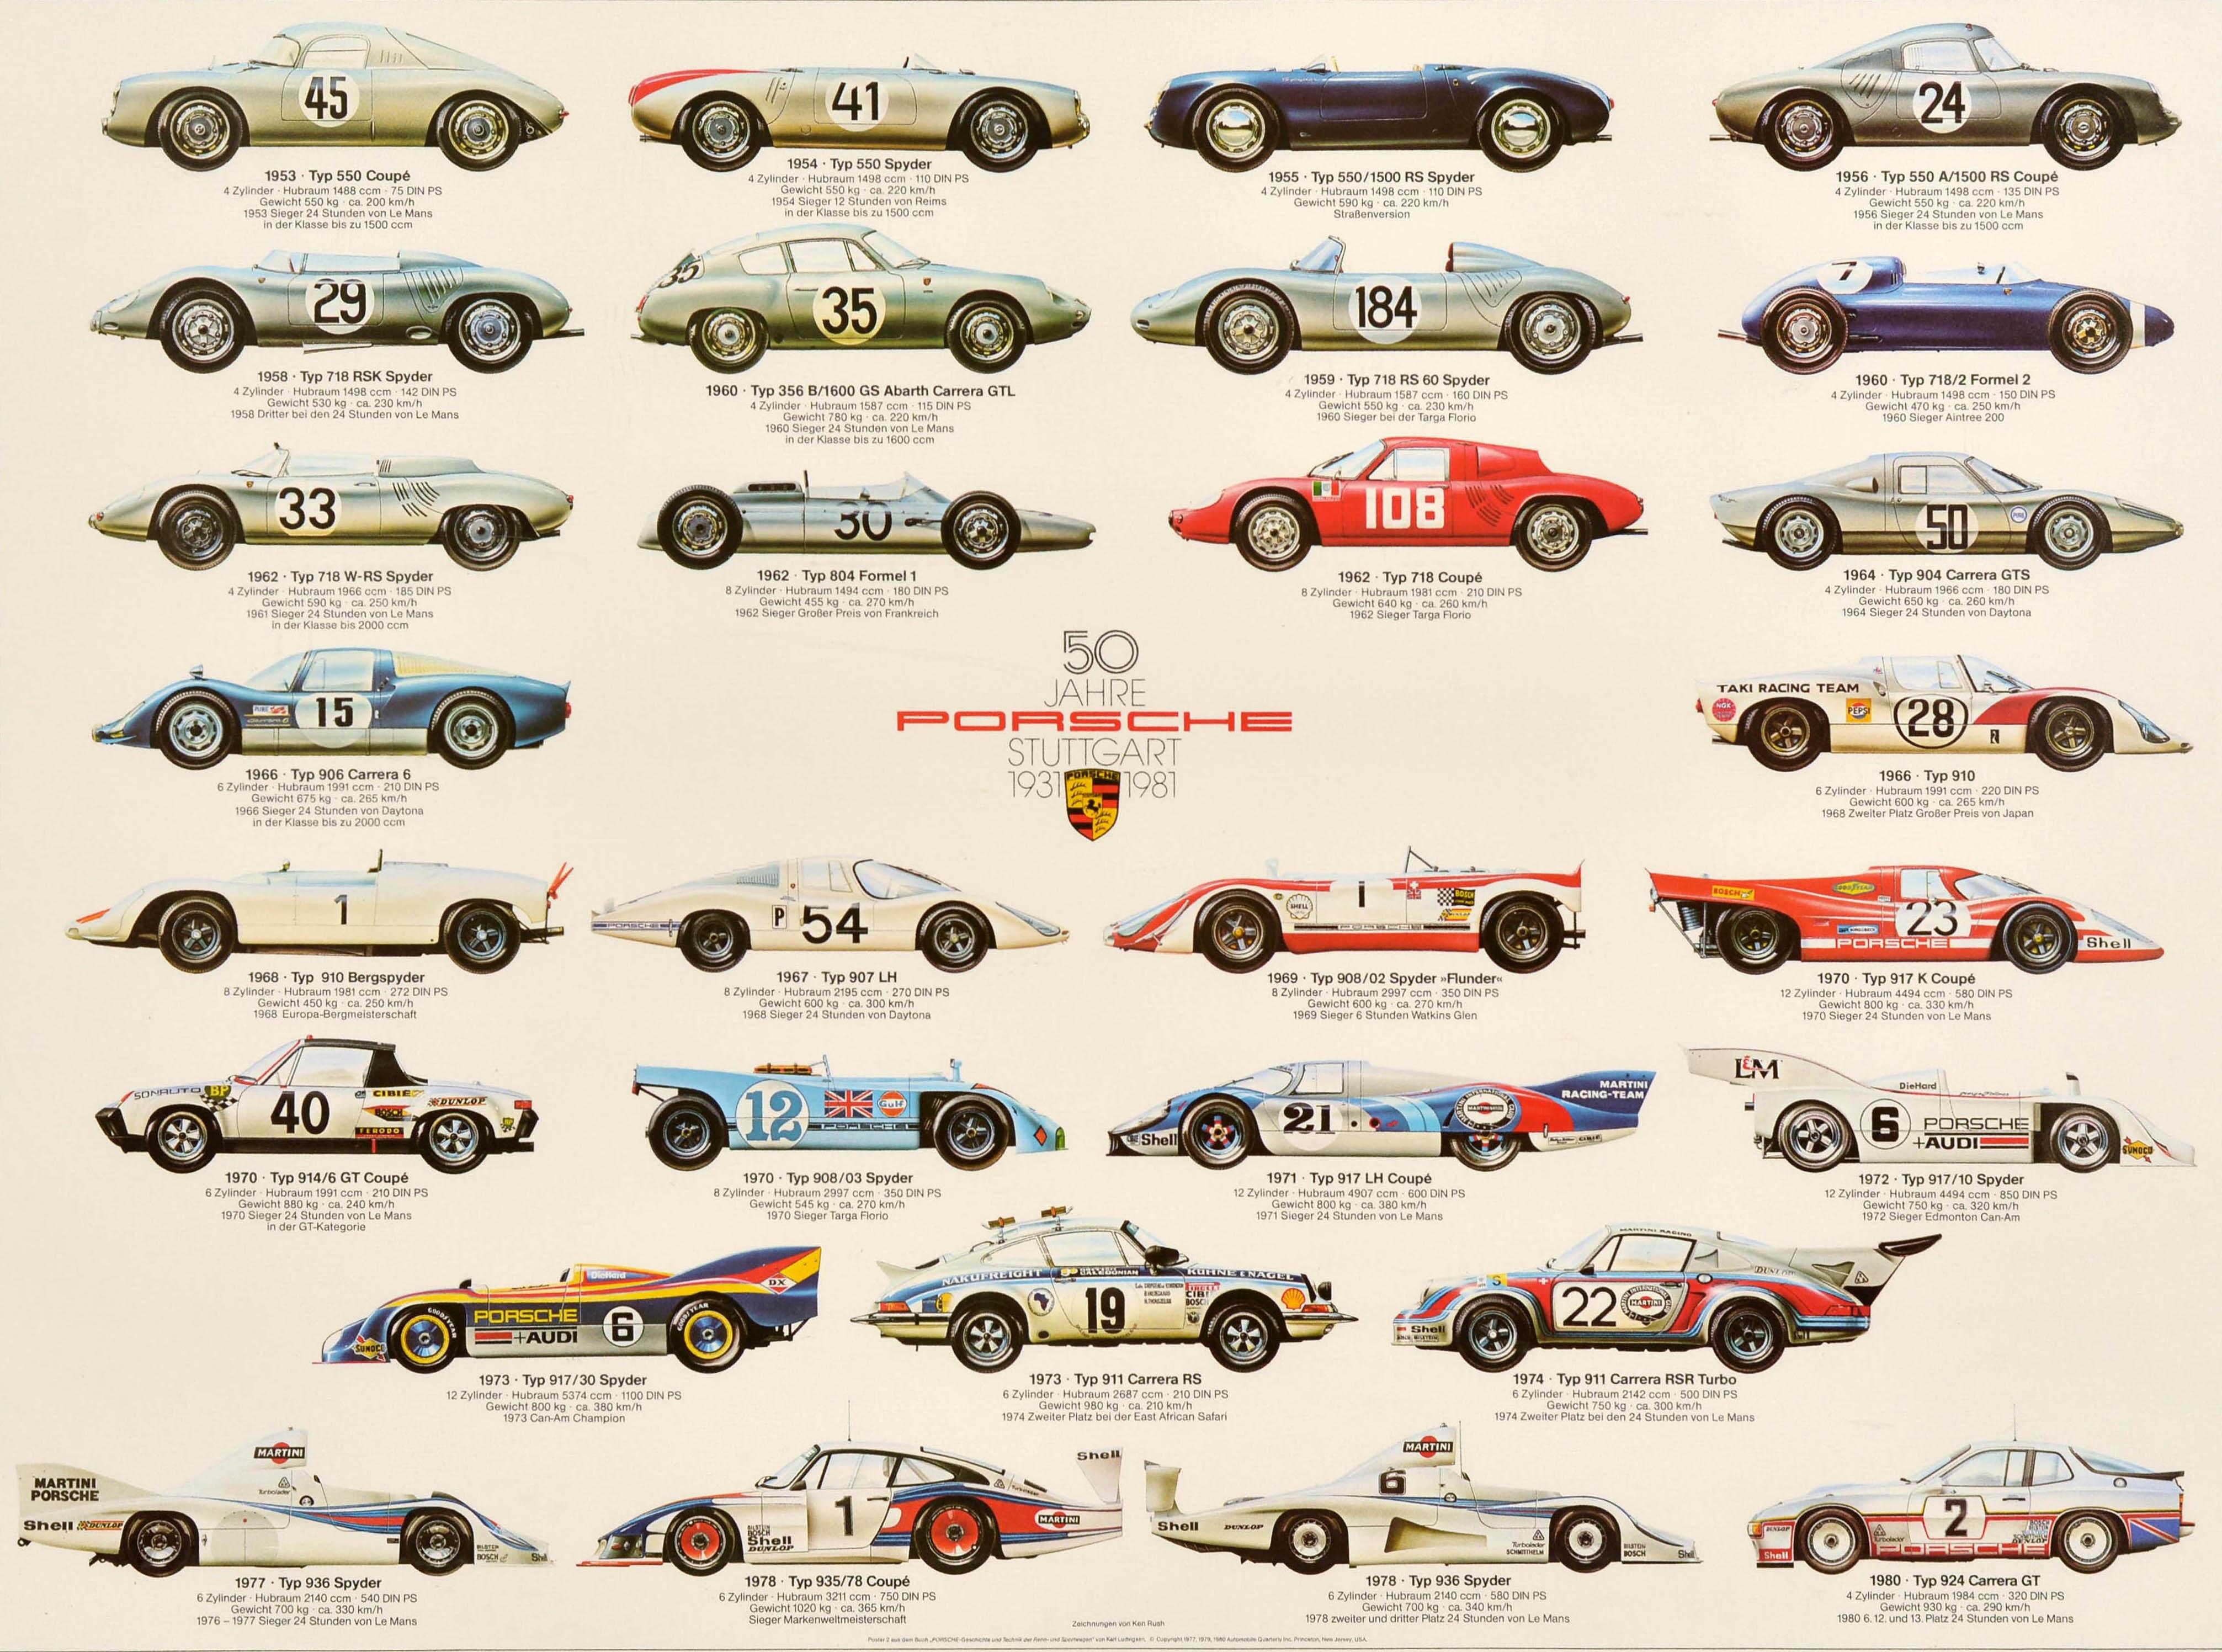 Original Vintage Car Advertising Poster Porsche Stuttgart 1931-1981 Racing Auto - Print by Ken Rush